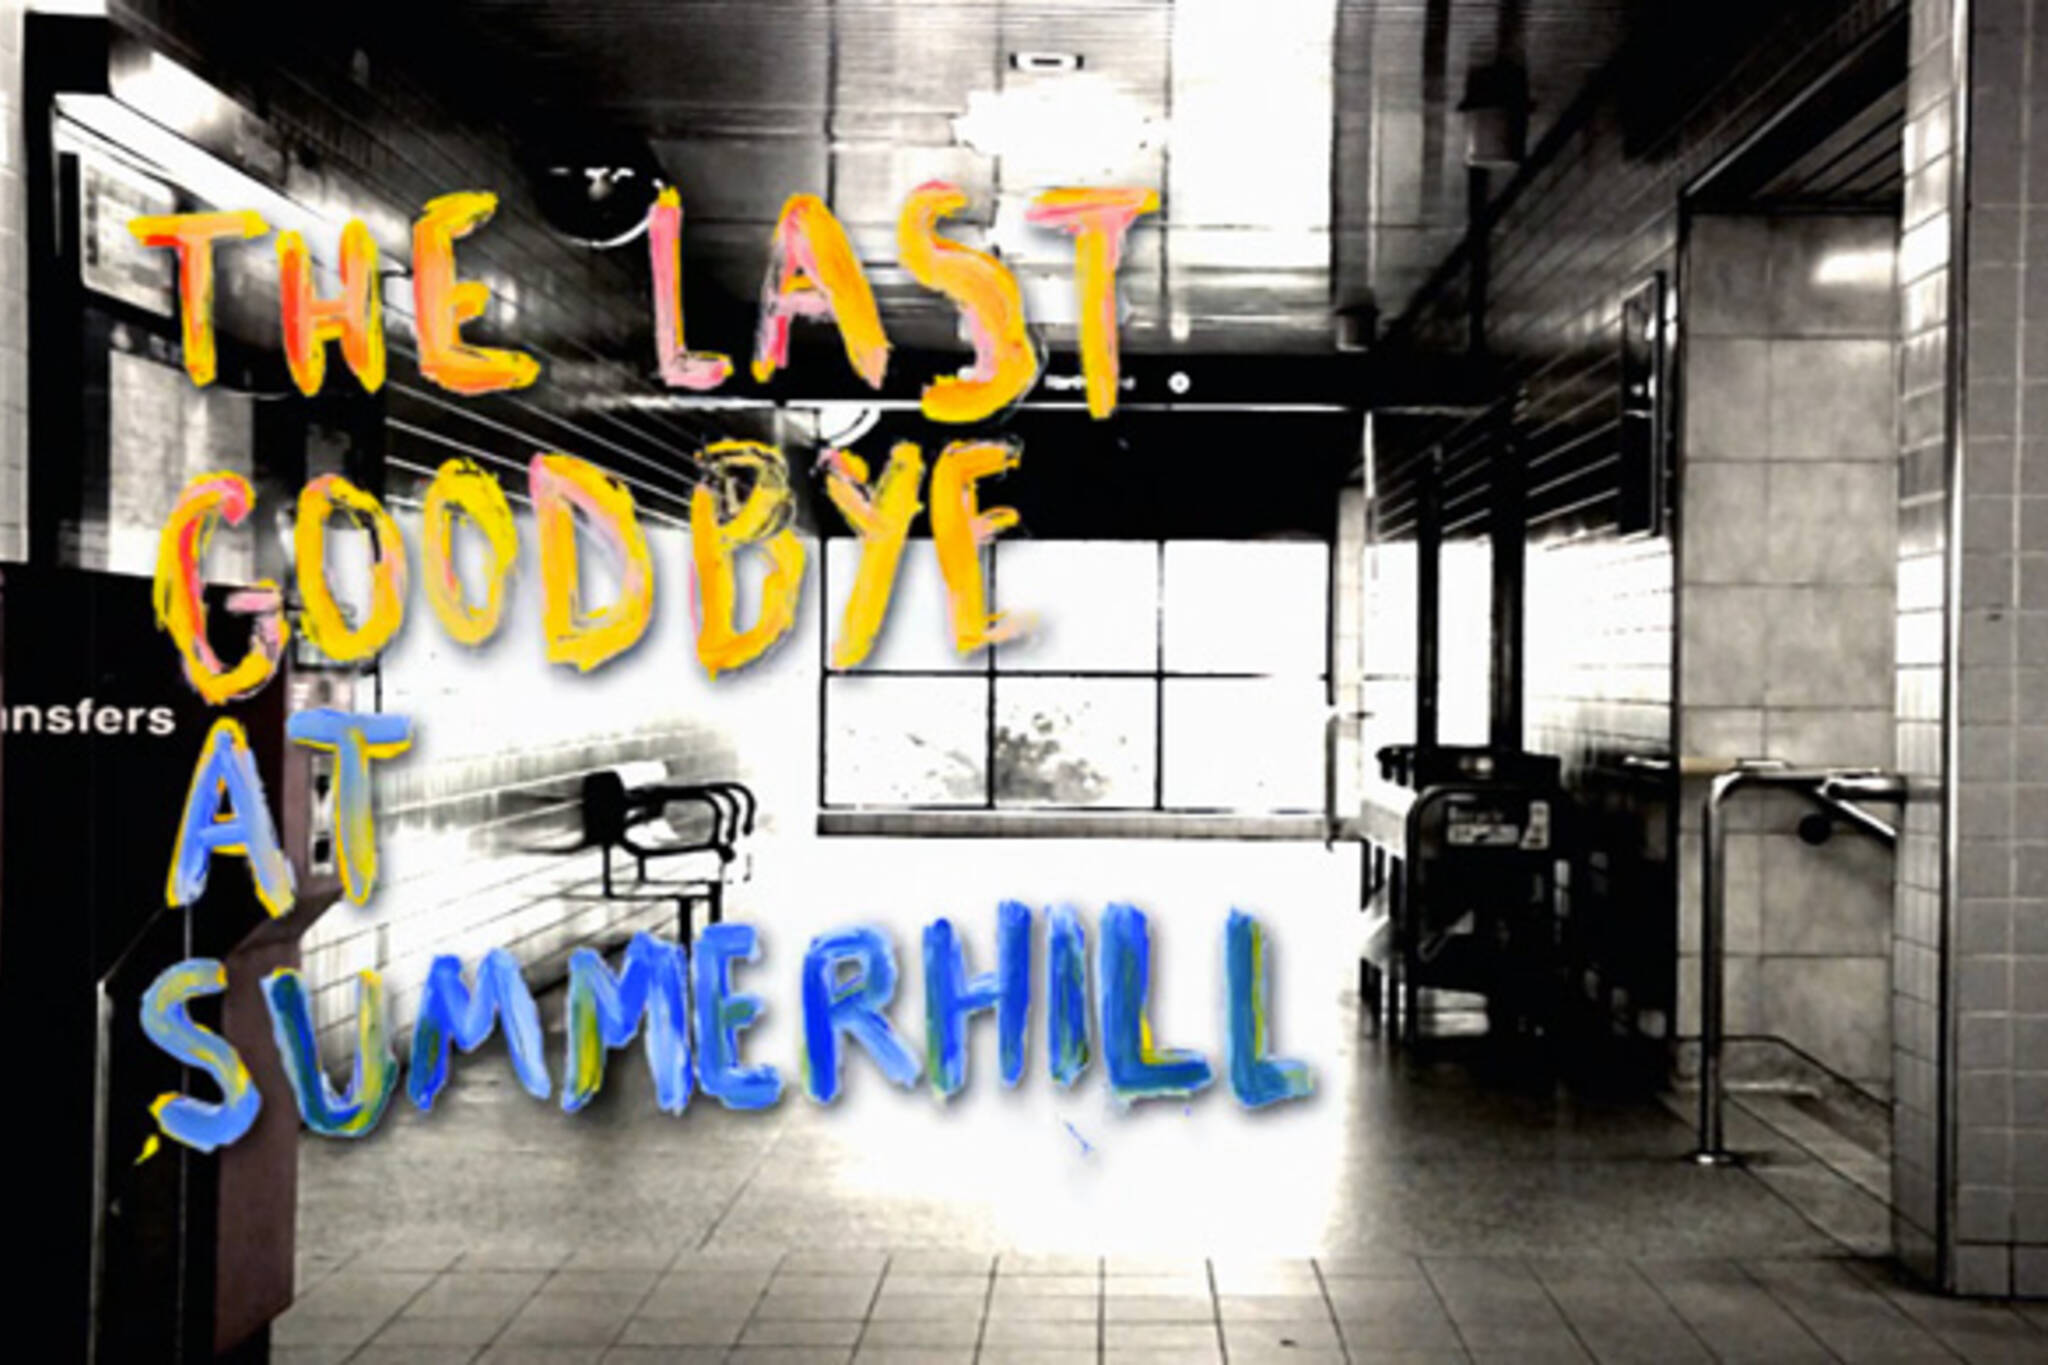 Last Good Bye at Summerhill Station